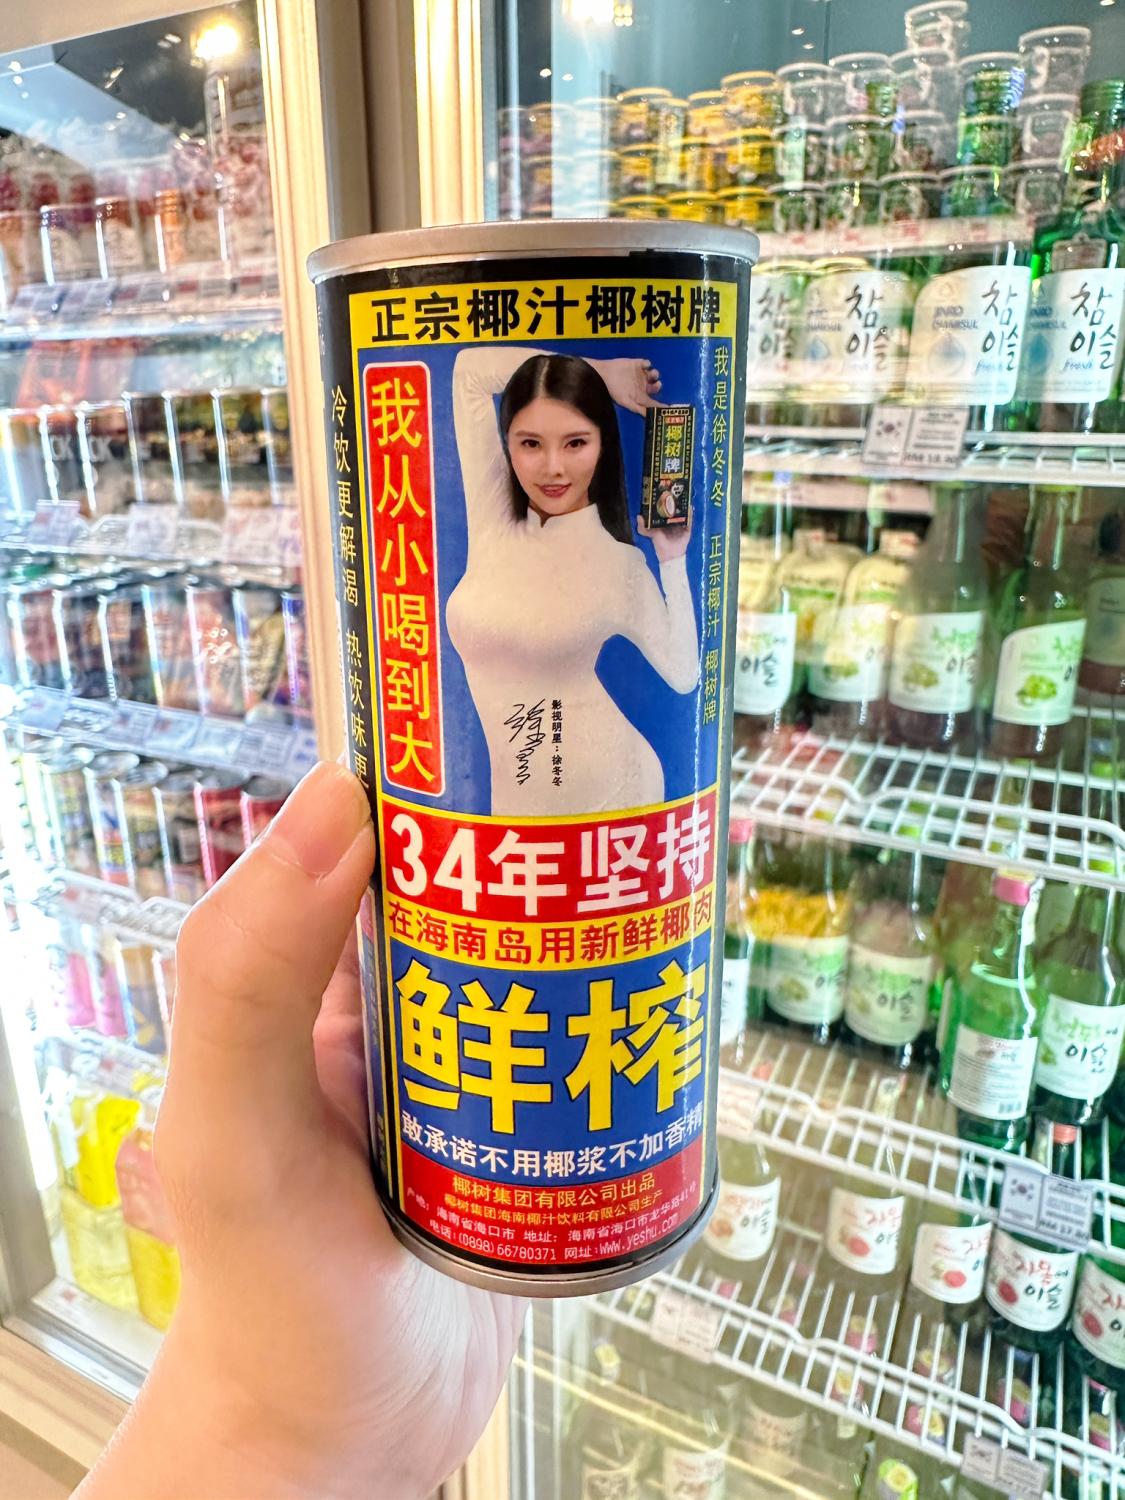 ye_shu_pai_coconut_milk_beverage.jpg